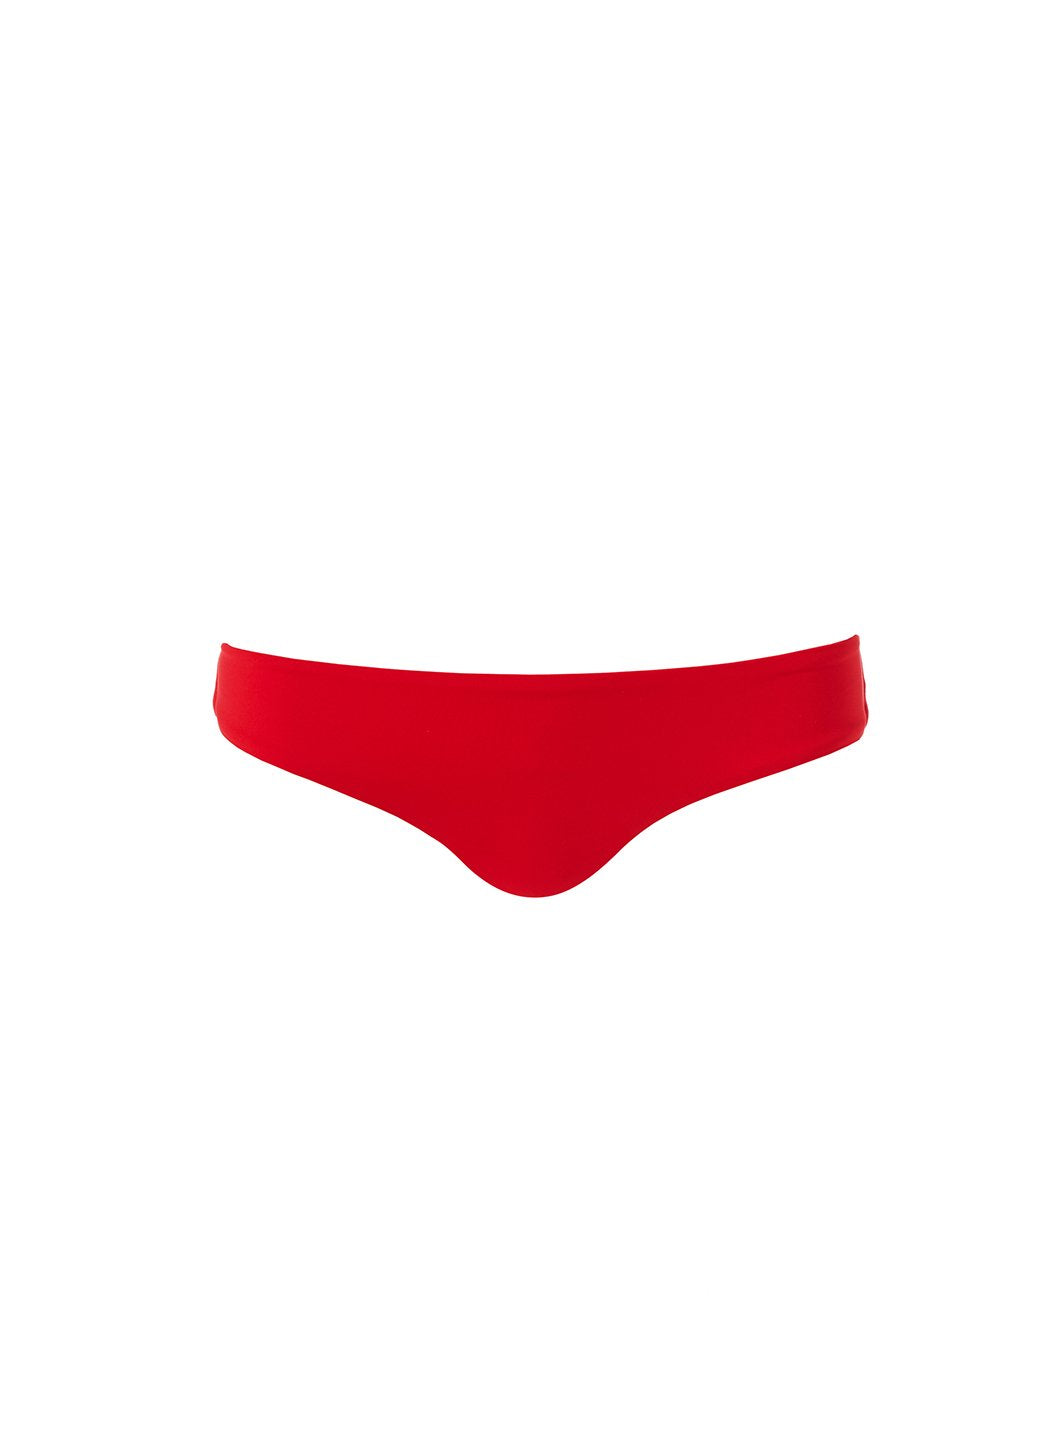 Majorca Red Bikini Bottom